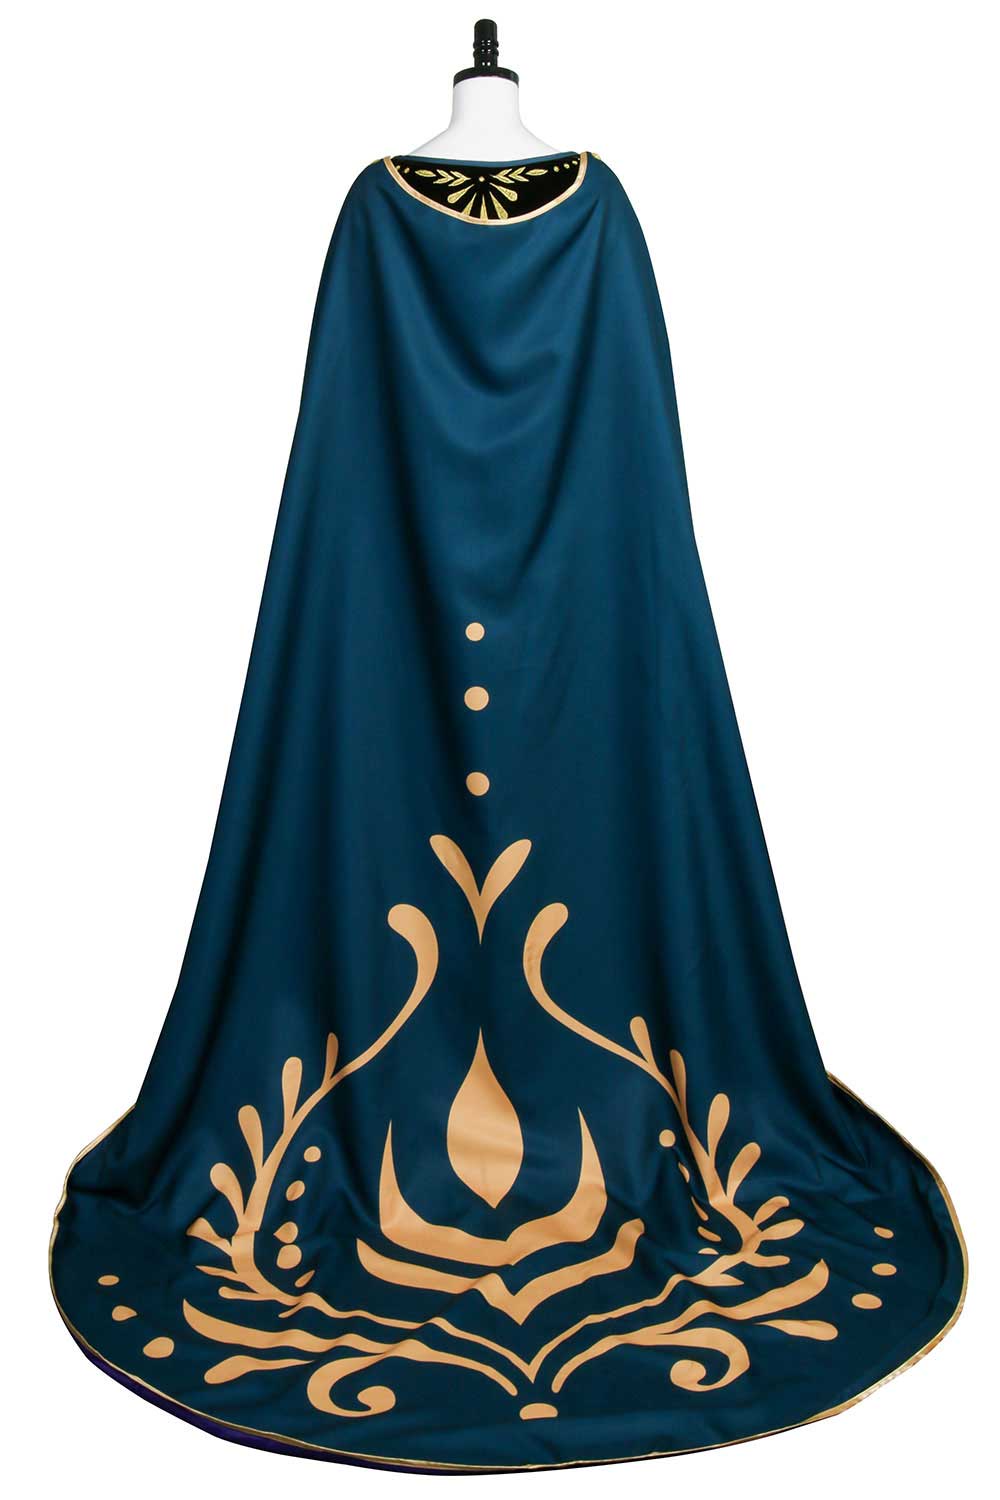 Disney Frozen 2 Queen Anna Coronation Dress Princess Halloween Cosplay Costume Outfit Cape-Takerlama